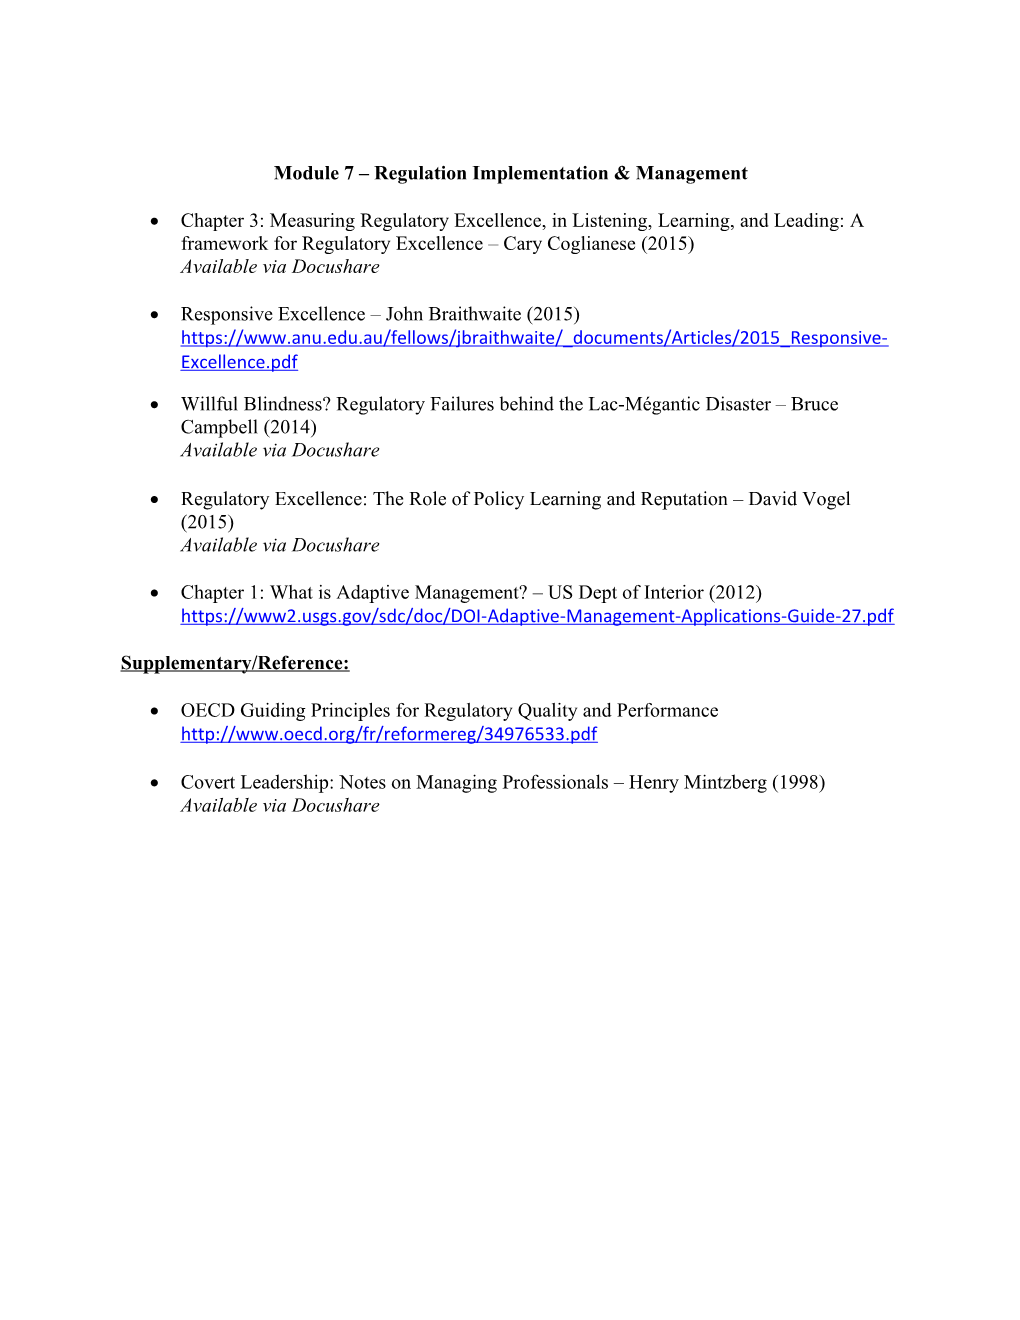 Module 7 Regulation Implementation & Management